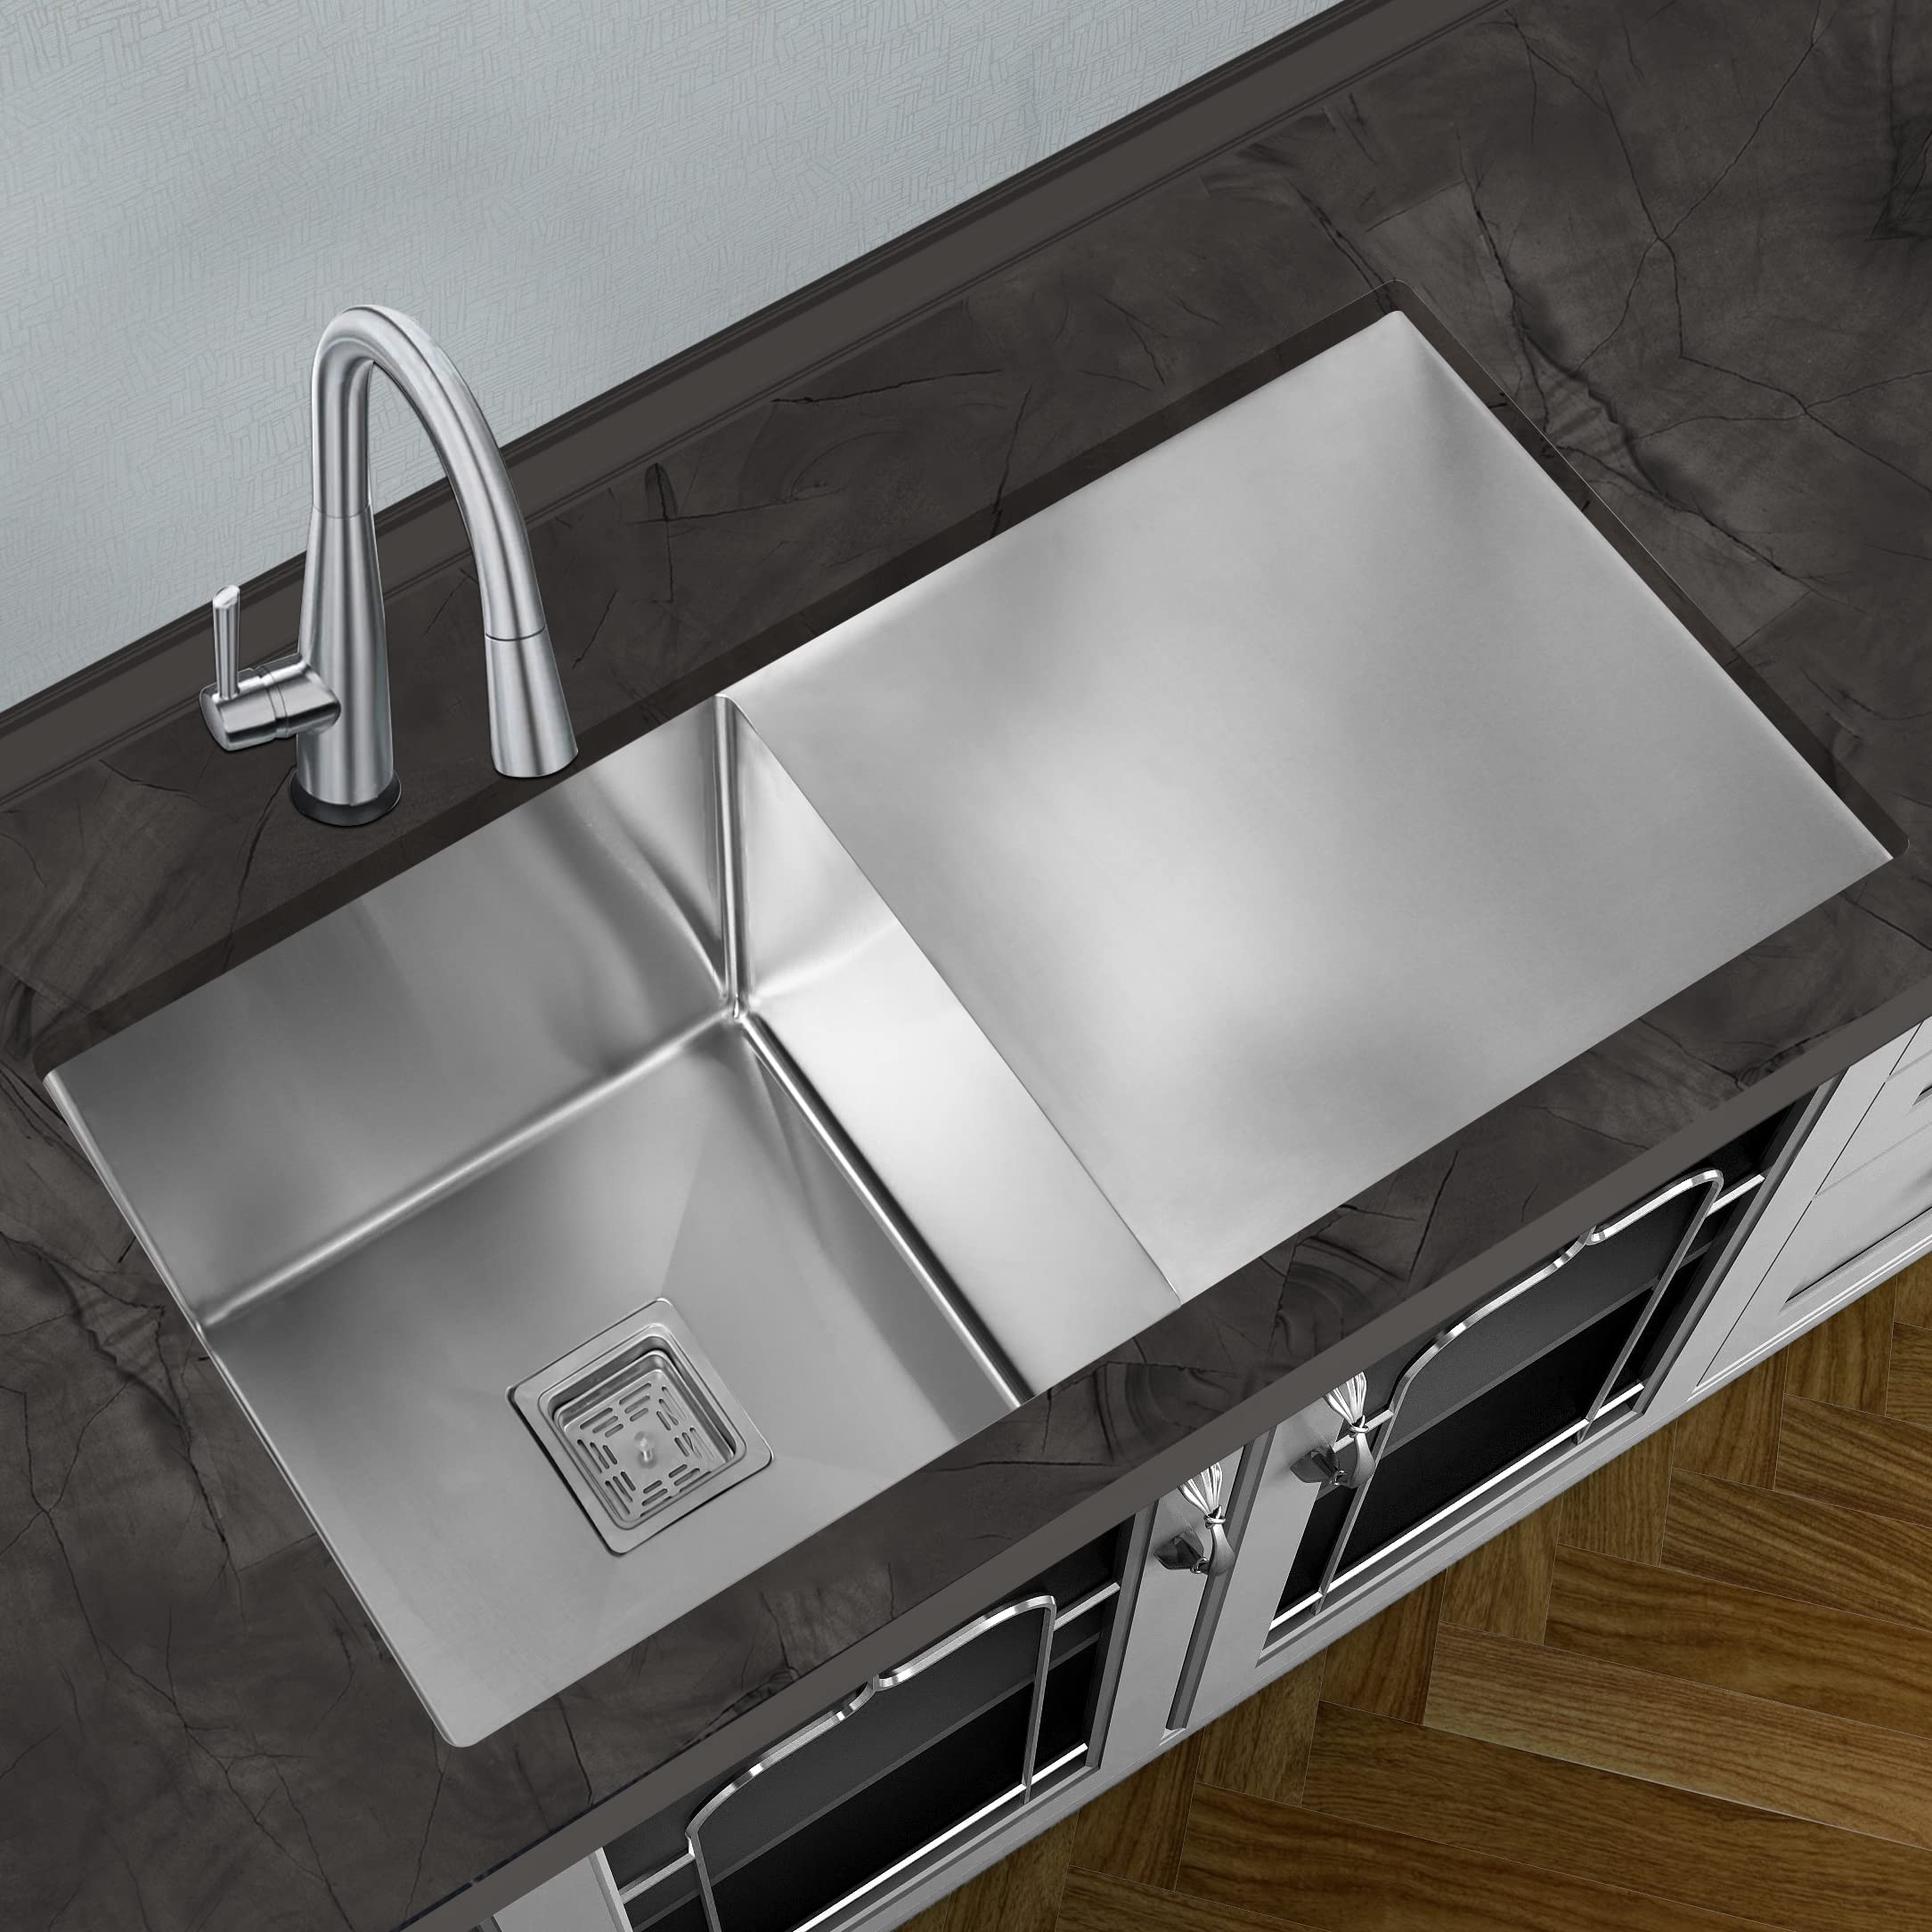 Plantex Stainless Steel Single Bowl Handmade Kitchen Sink With Drain Board - Flushmount/Undermount/Top Mounted - Matt Finish (37x18 Inches)